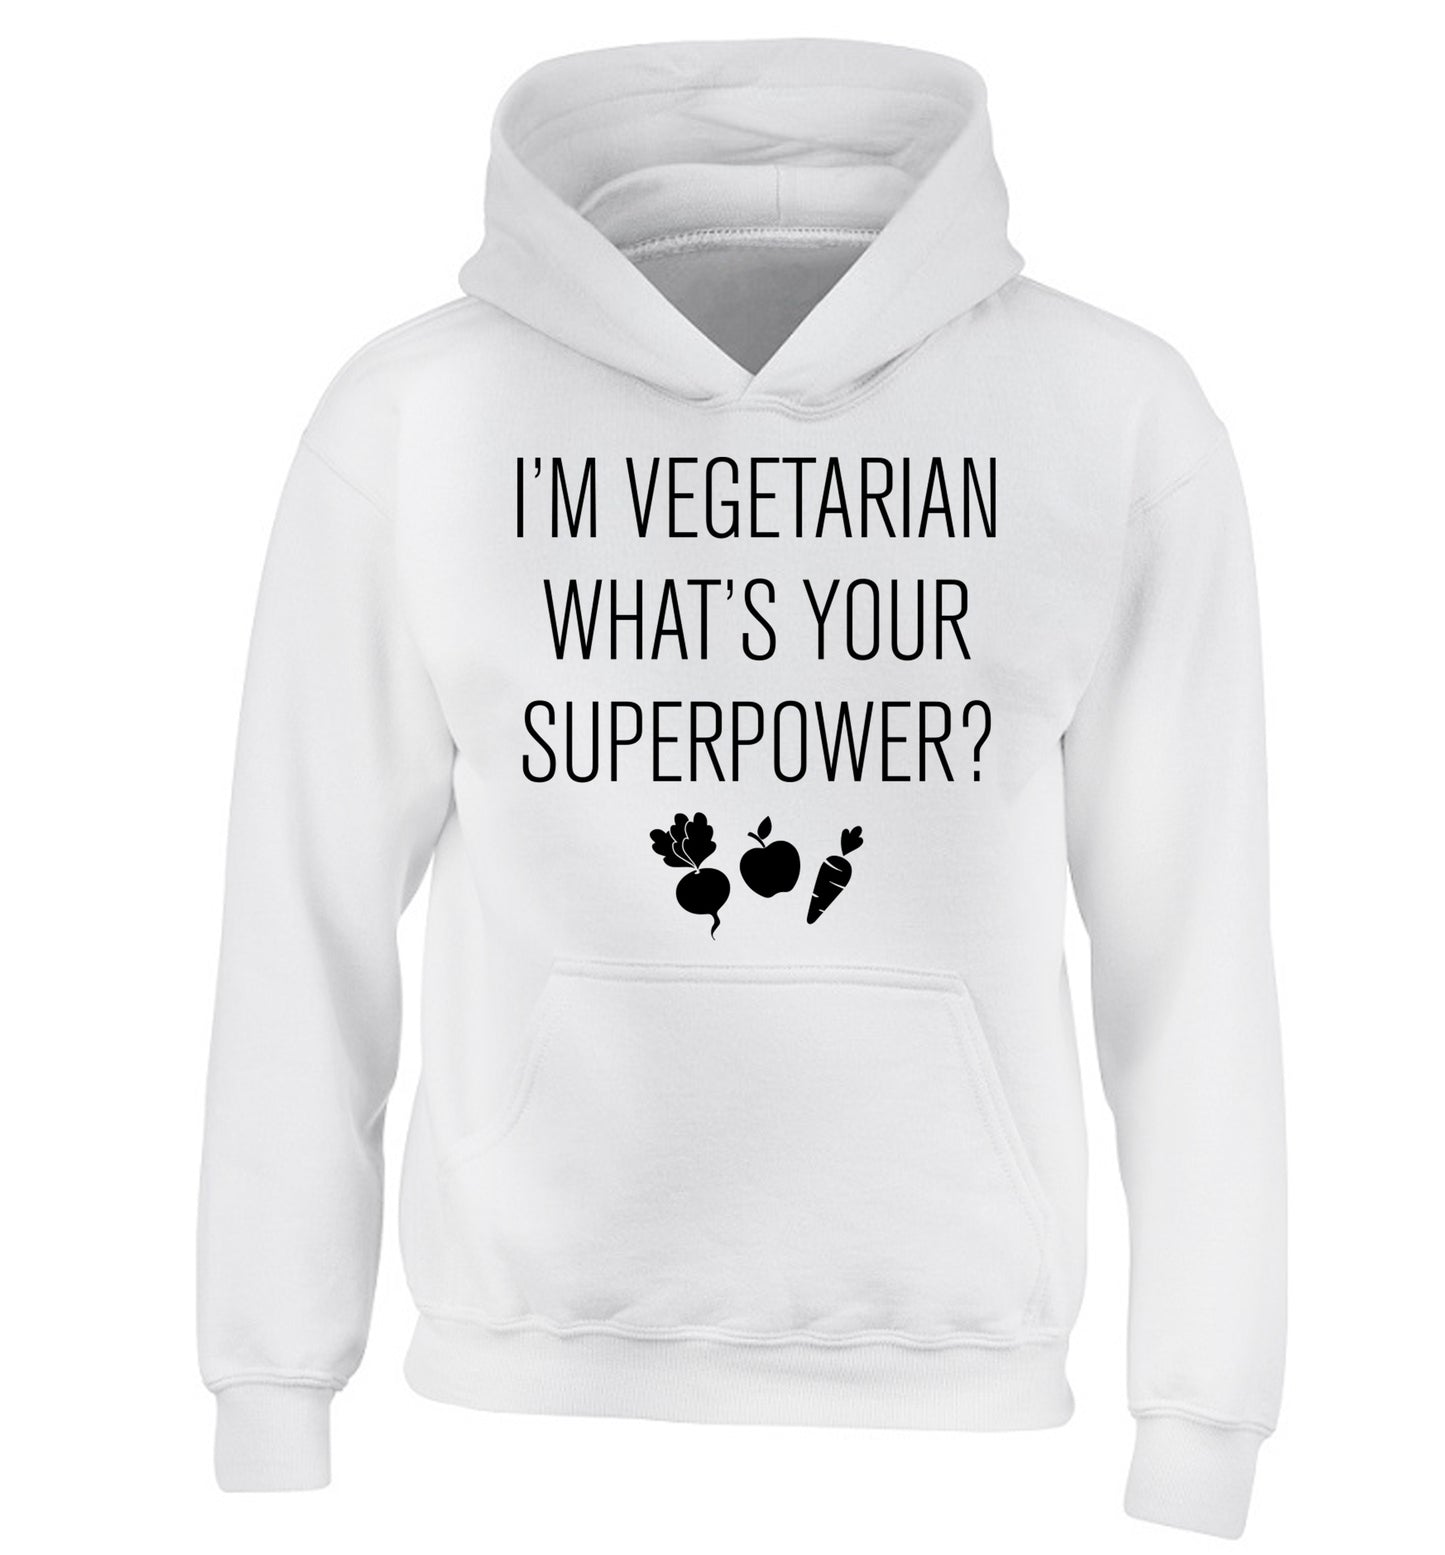 I'm vegetarian what's your superpower? children's white hoodie 12-13 Years